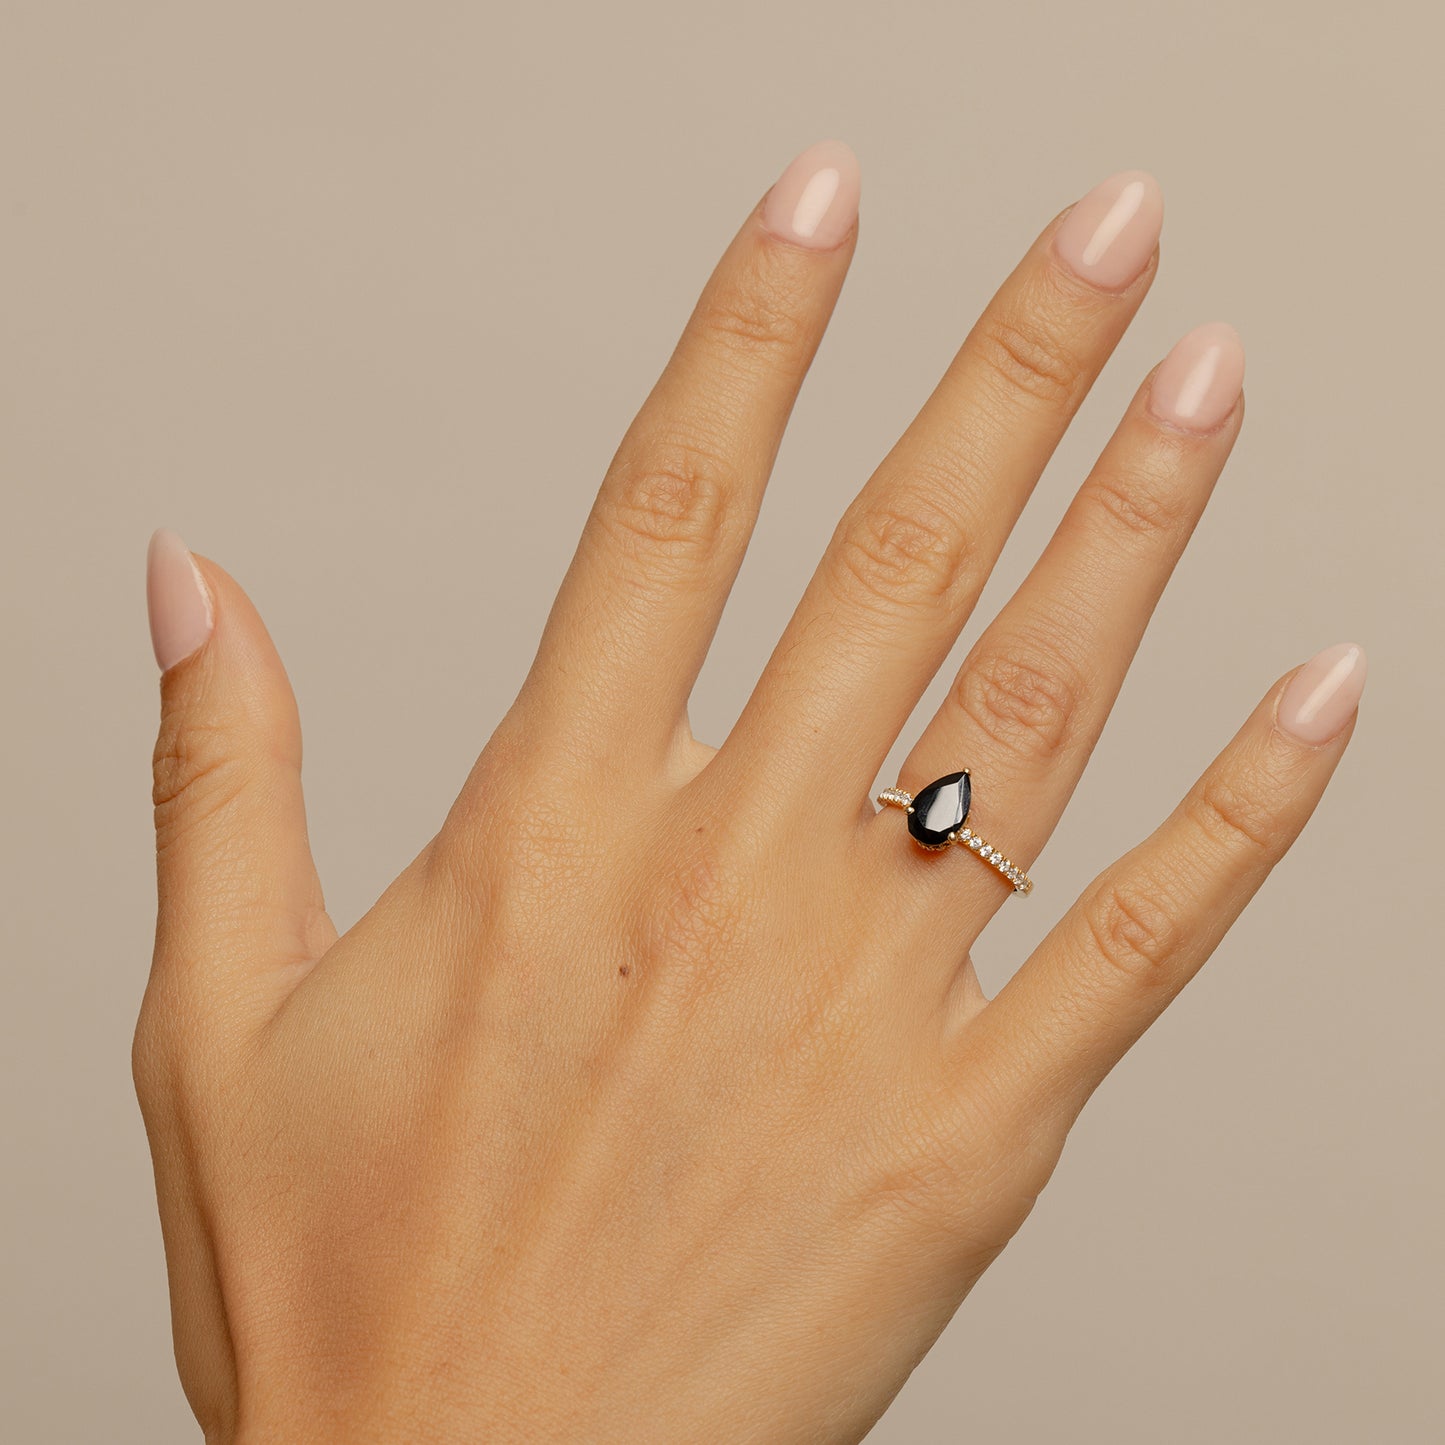 Pear Cut Black Diamond Ring with Pavé